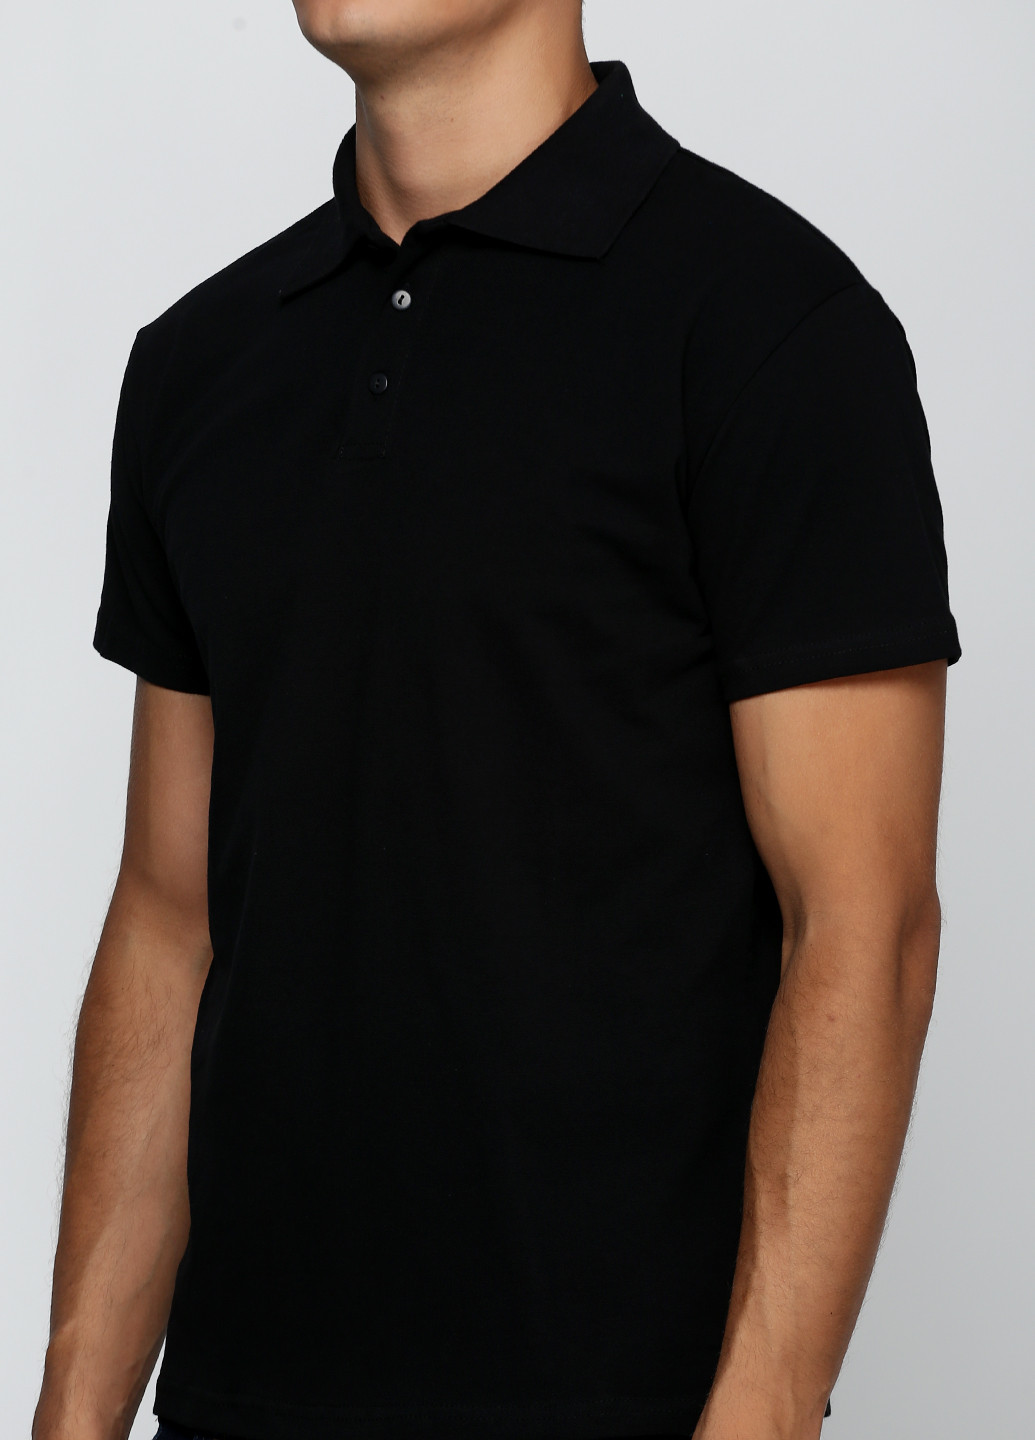 Черная футболка-поло для мужчин Роза однотонная